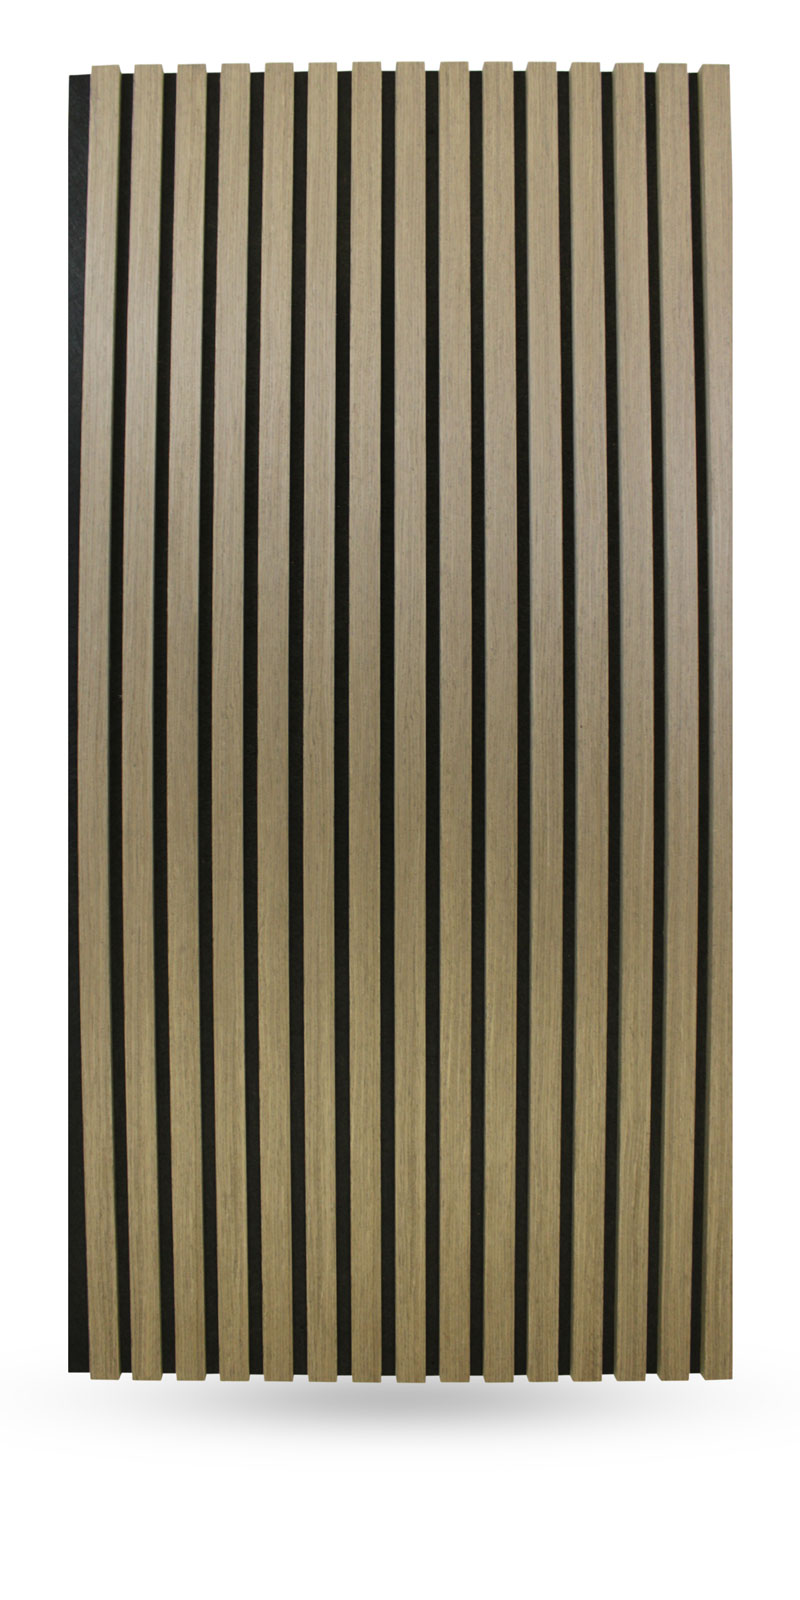 American Walnut Acoustic Wall Panels Real Wood Veneer Three-Sided Slats